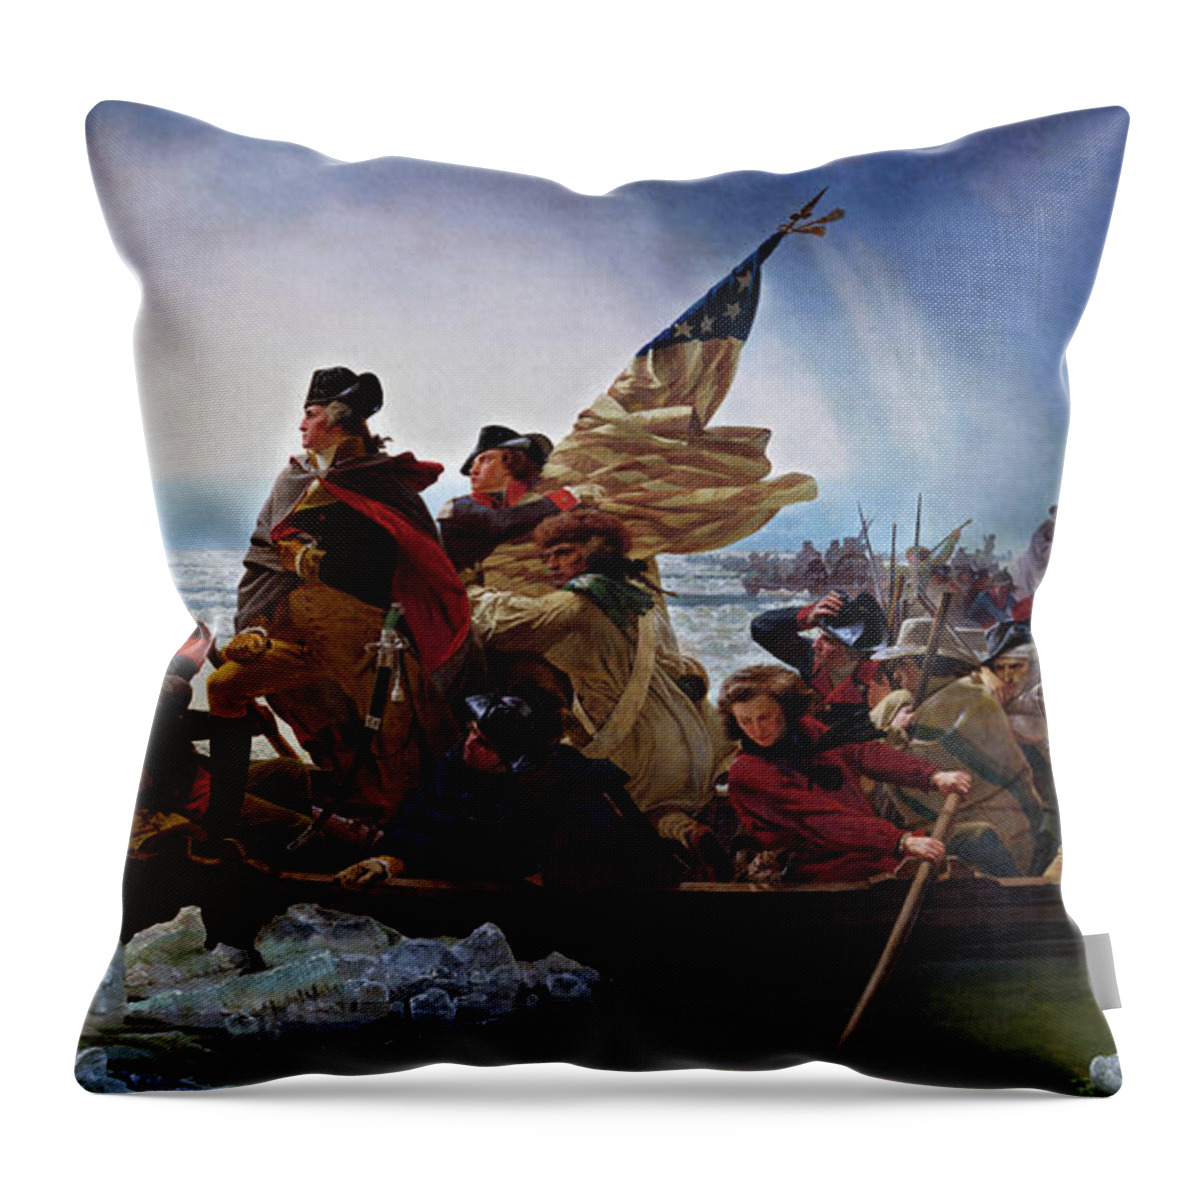 Washington Crossing The Delaware Throw Pillow featuring the painting Washington Crossing the Delaware by Emanuel Leutze by Rolando Burbon